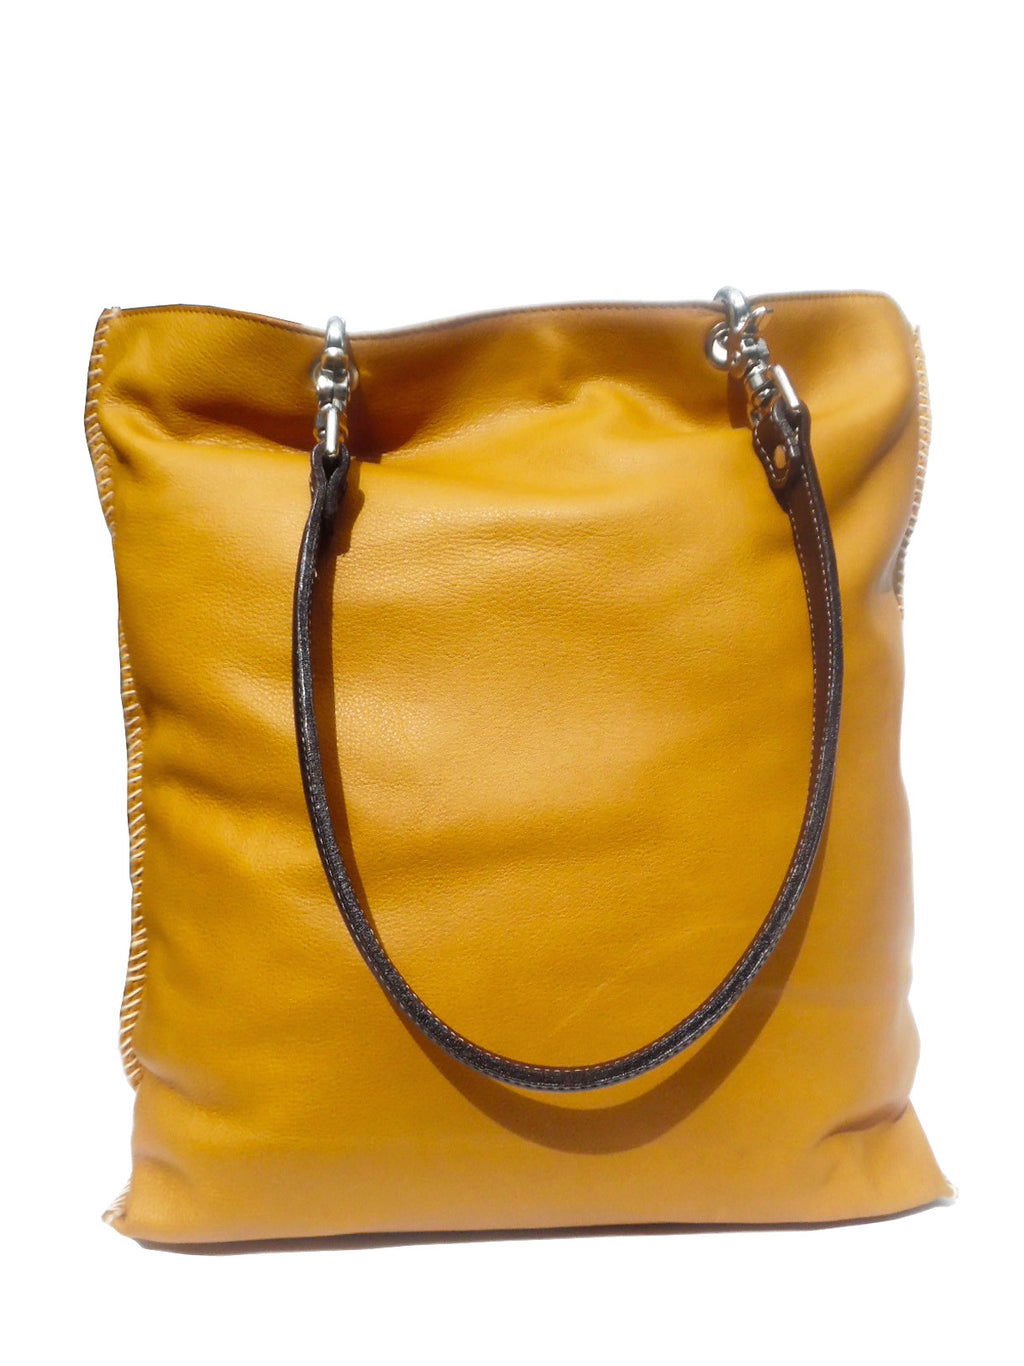 Gajumbo Tote Bag Napa Leather Golden Wheat